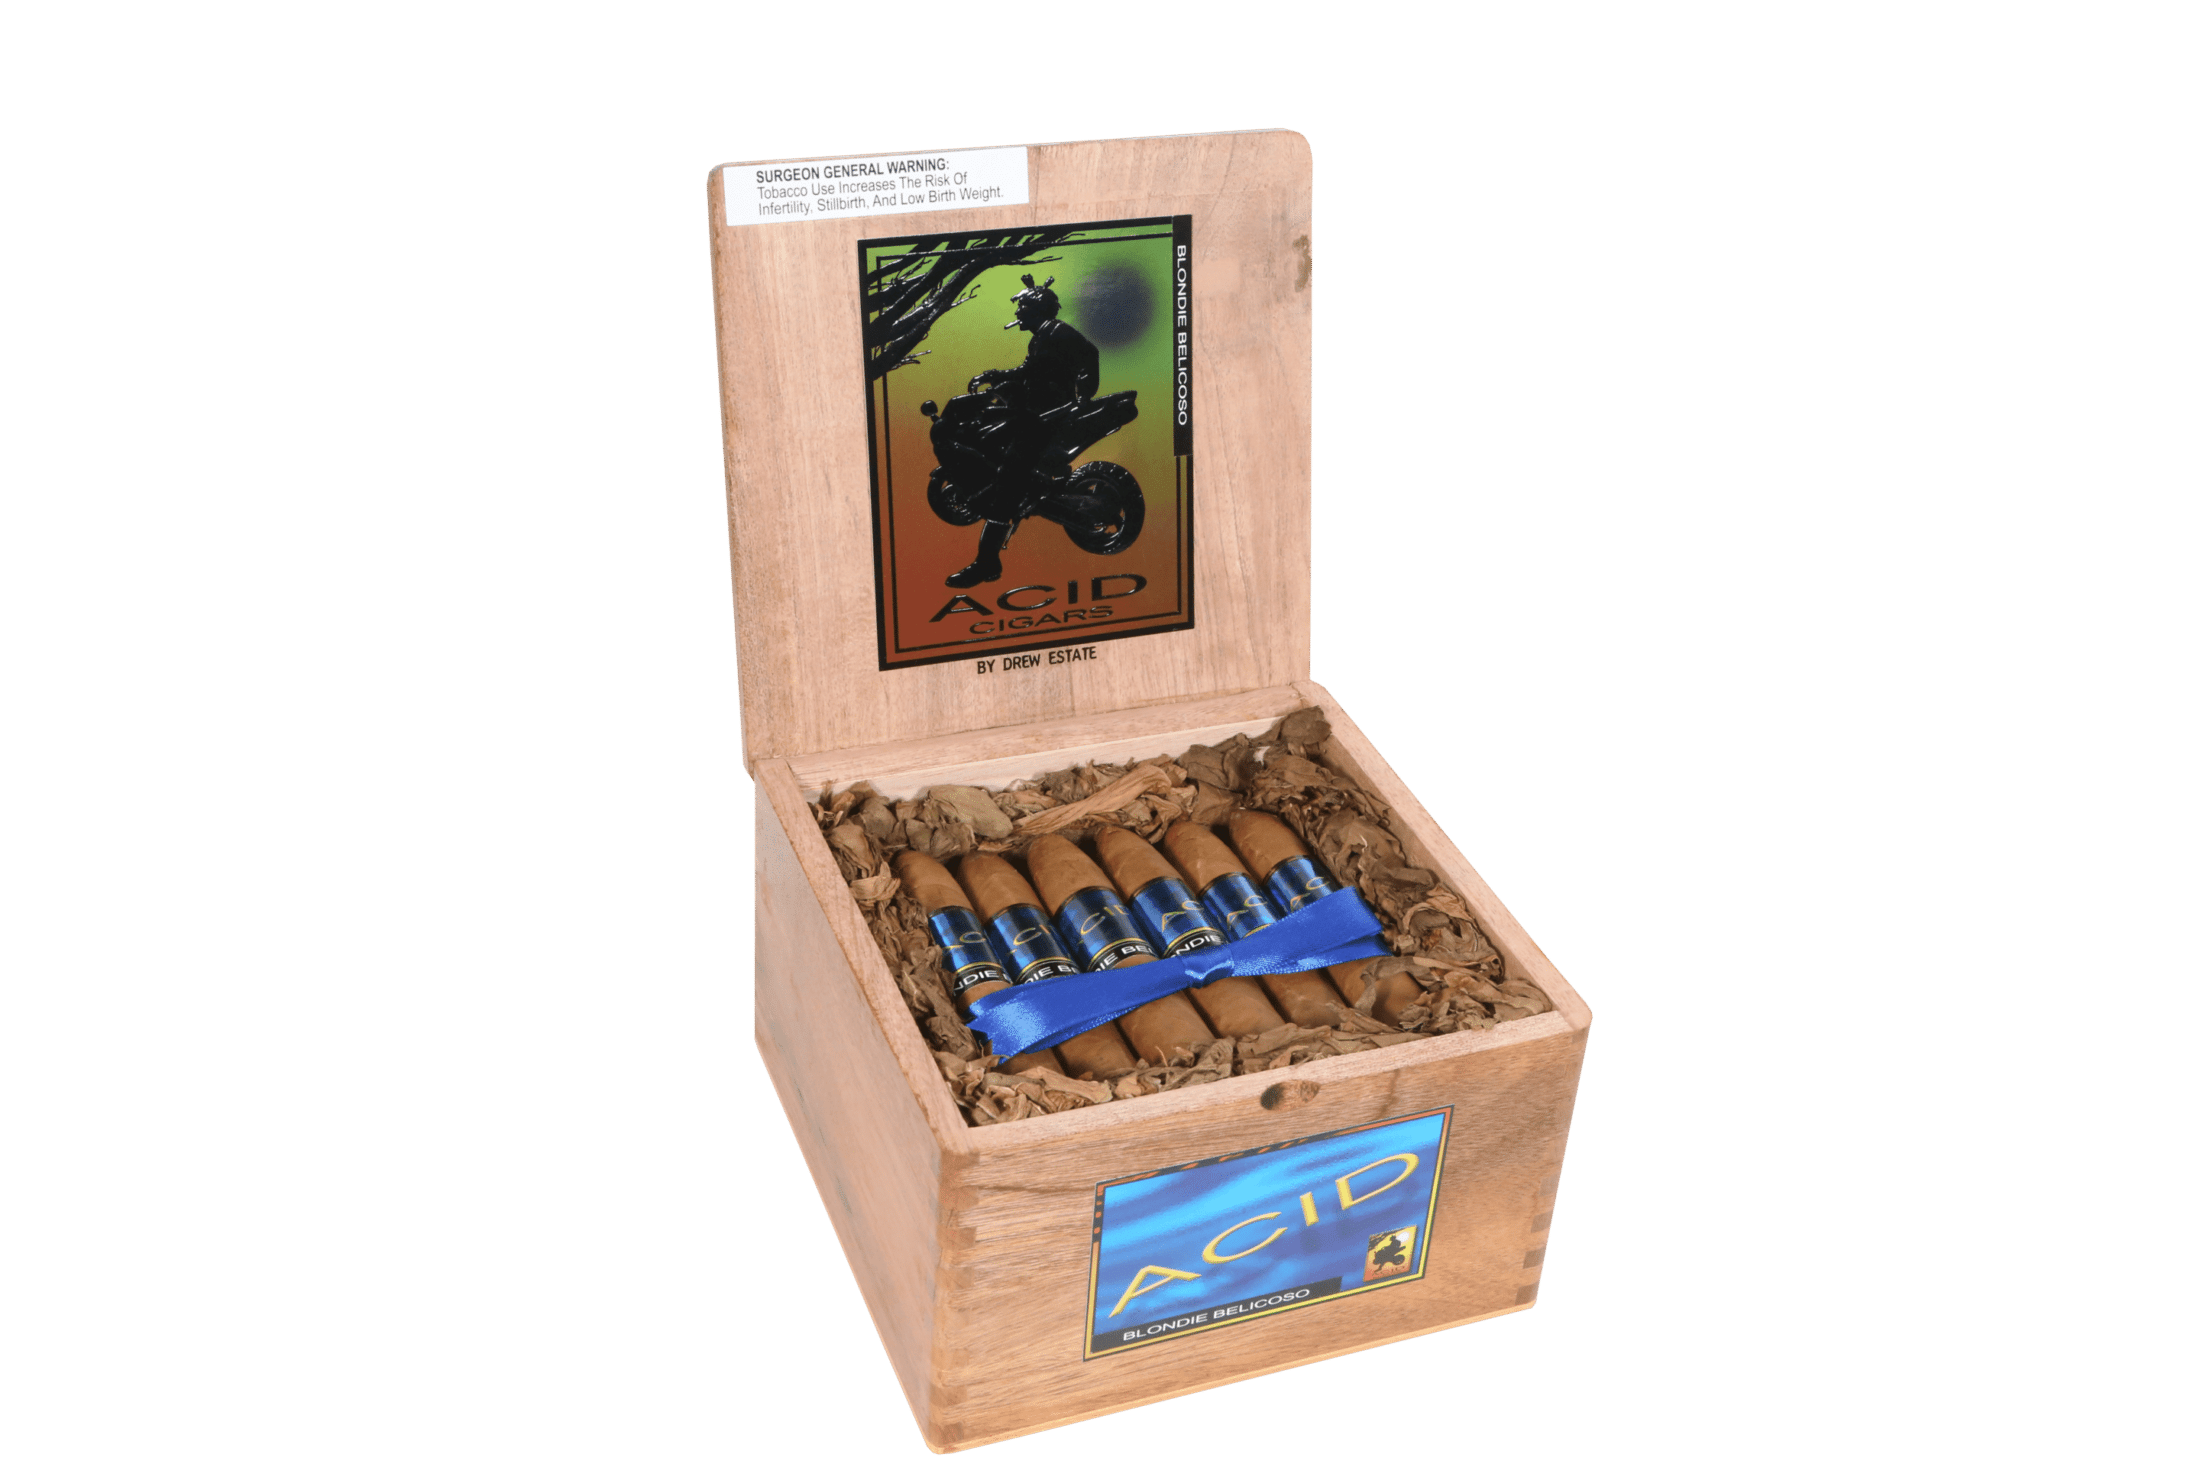 Open box of 24 count Acid Blondie Belicoso cigars